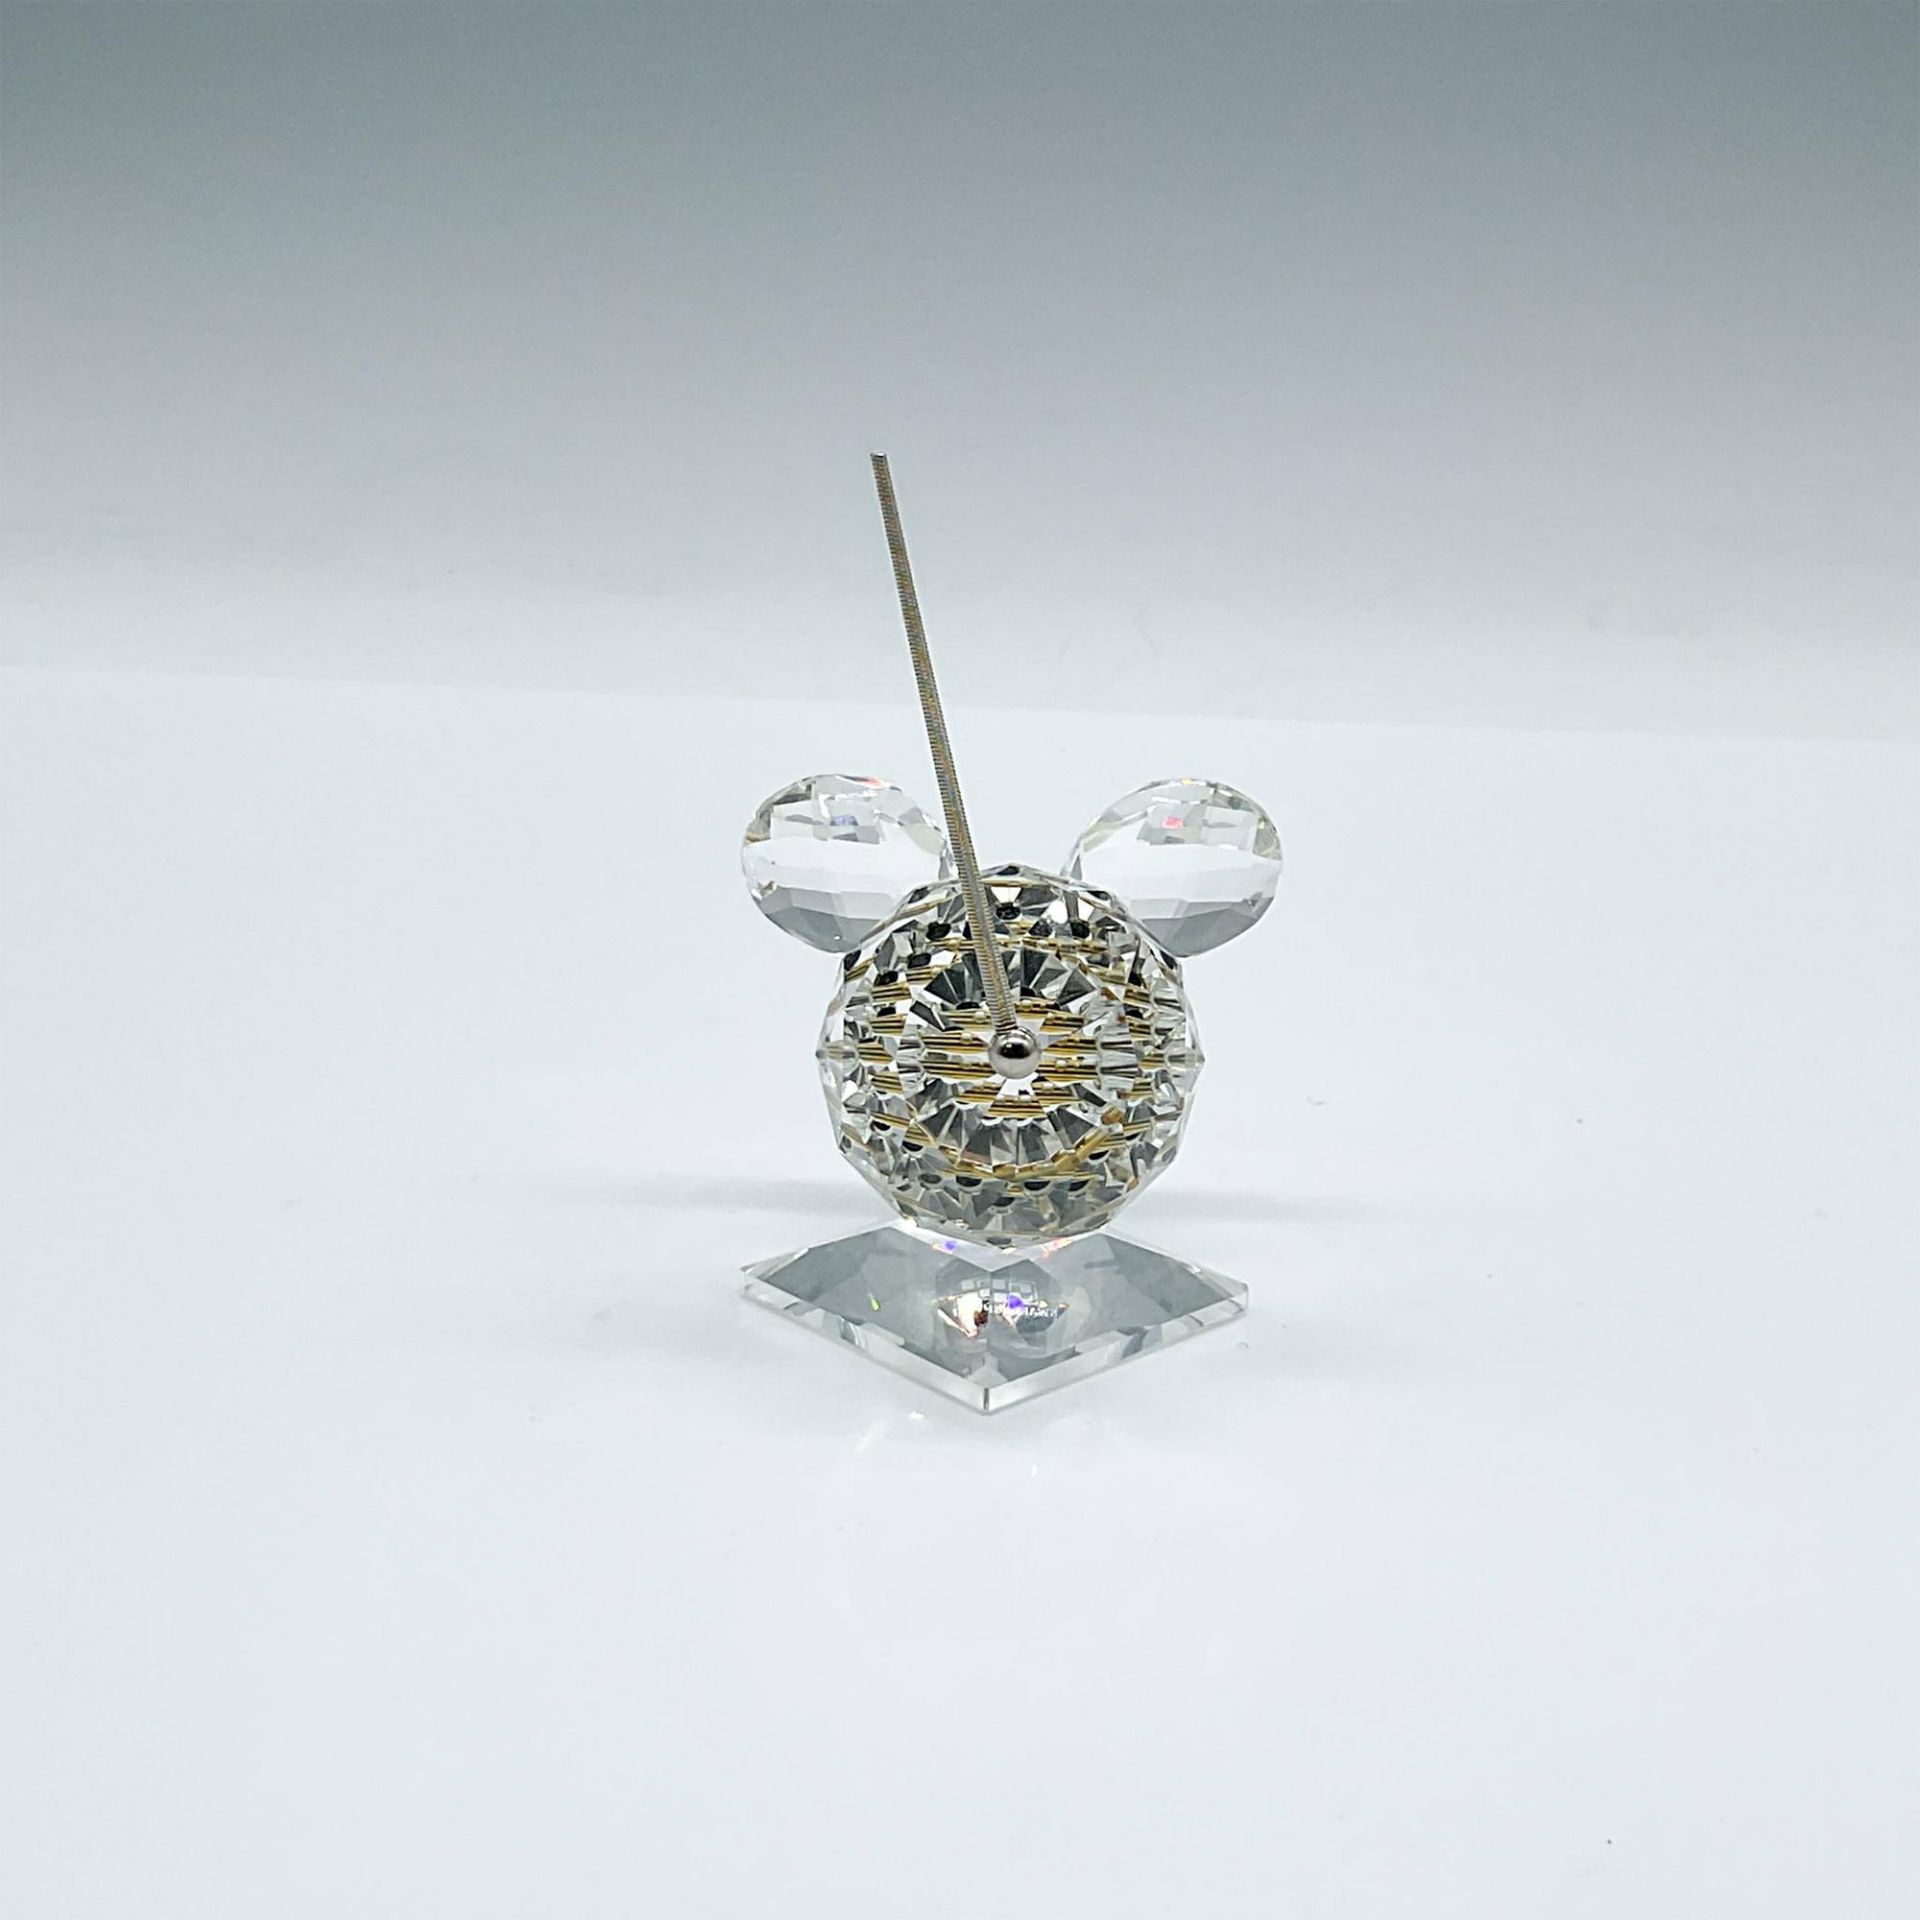 Swarovski Crystal Figurine, Mouse - Image 2 of 3